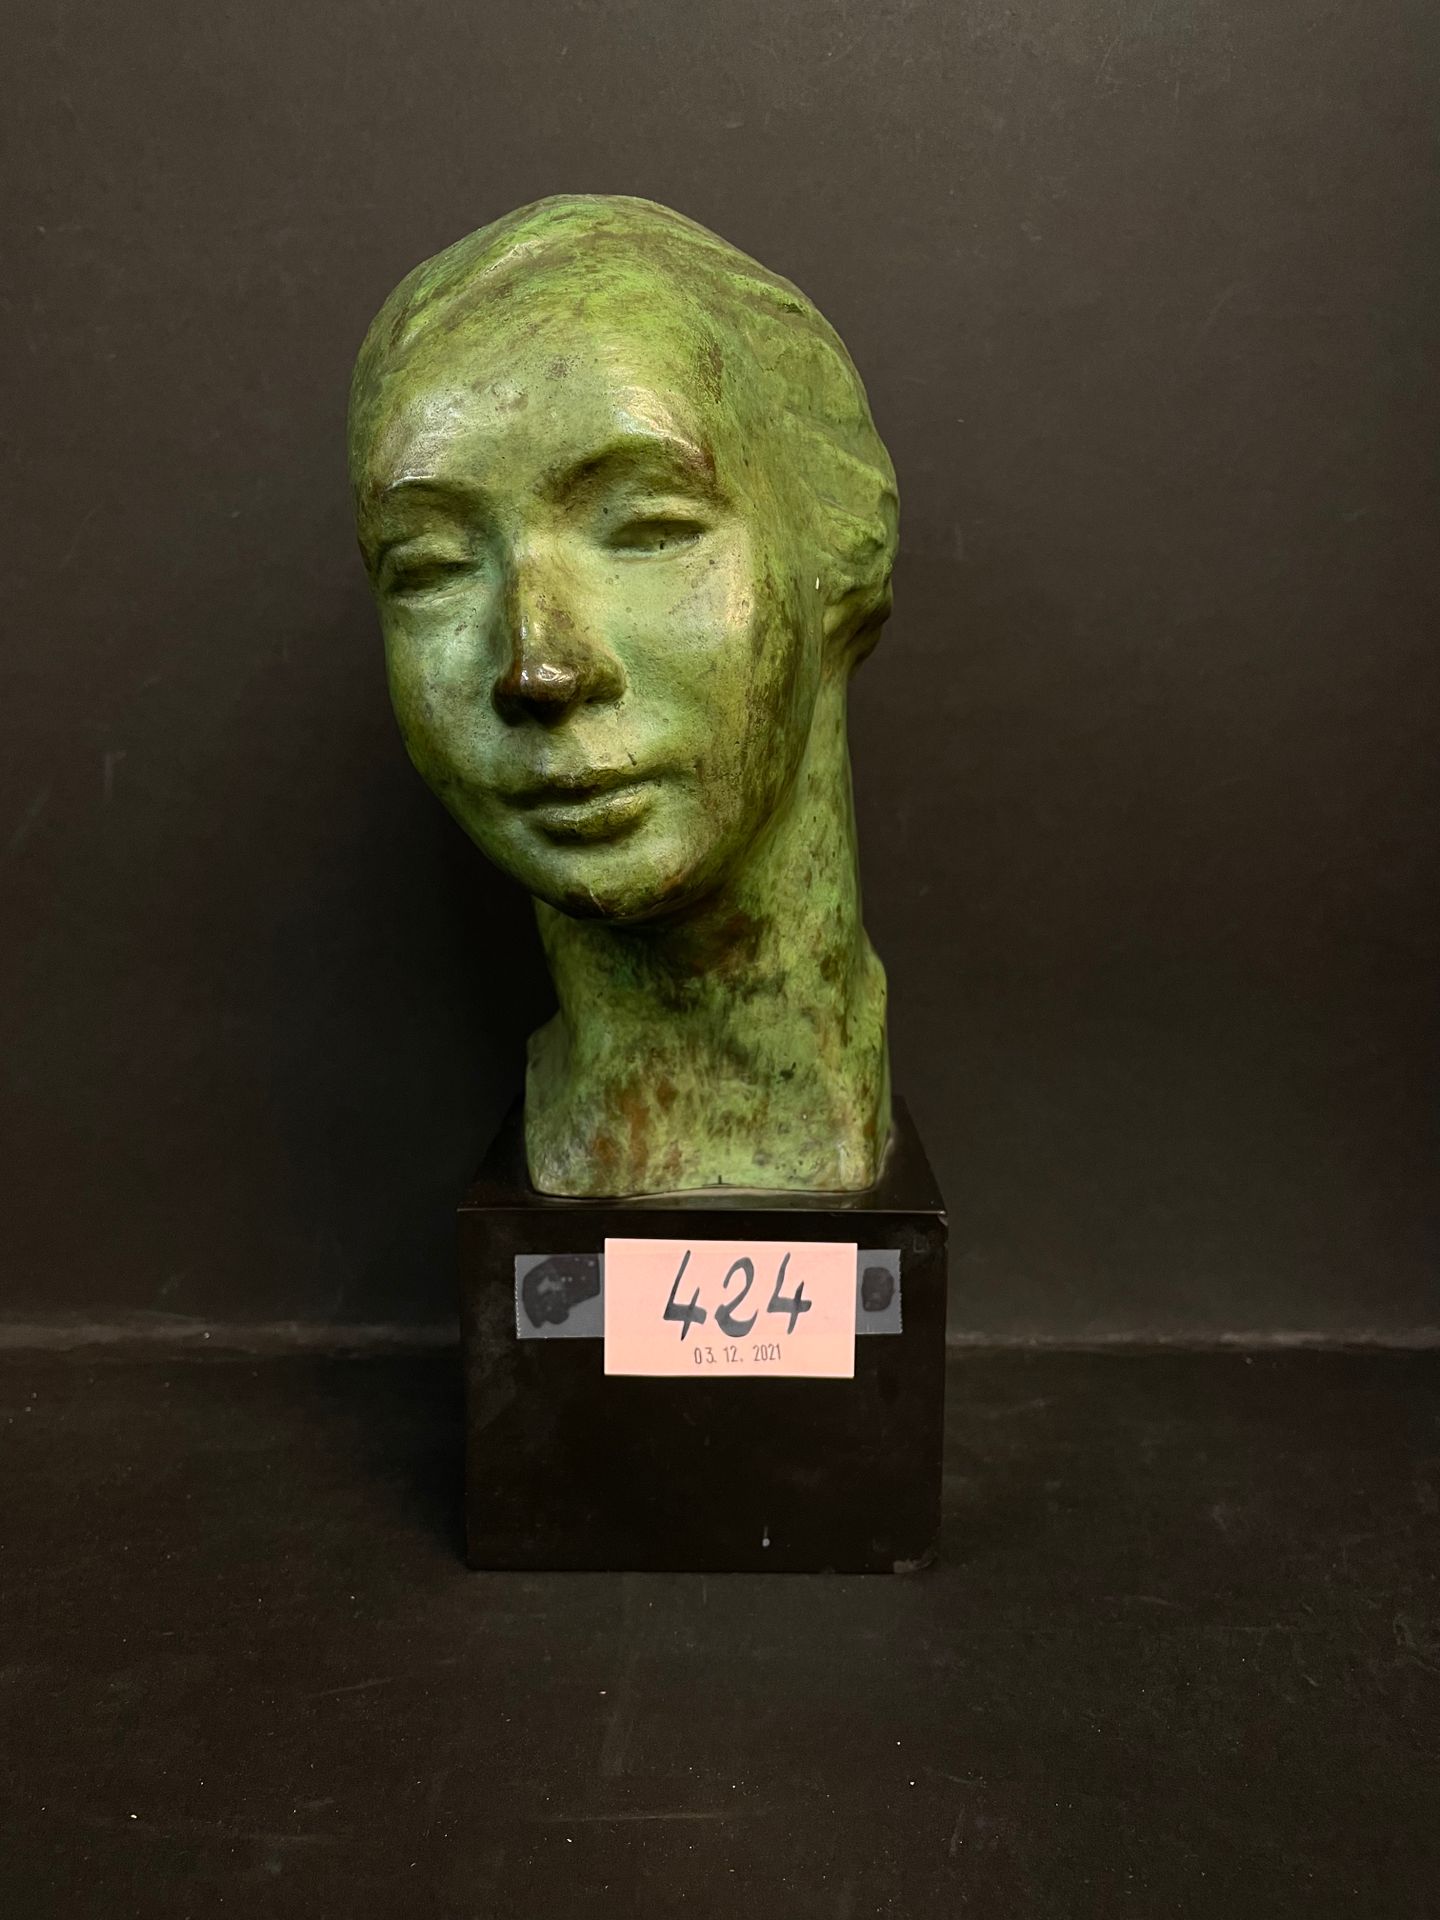 Null 韦尔普特（Jeanne）。"一个女人的头"。青铜雕塑，带有绿色铜锈，有签名，安装在一个黑色石头底座上。尺寸：30 x 8,5 x 10,5厘米。